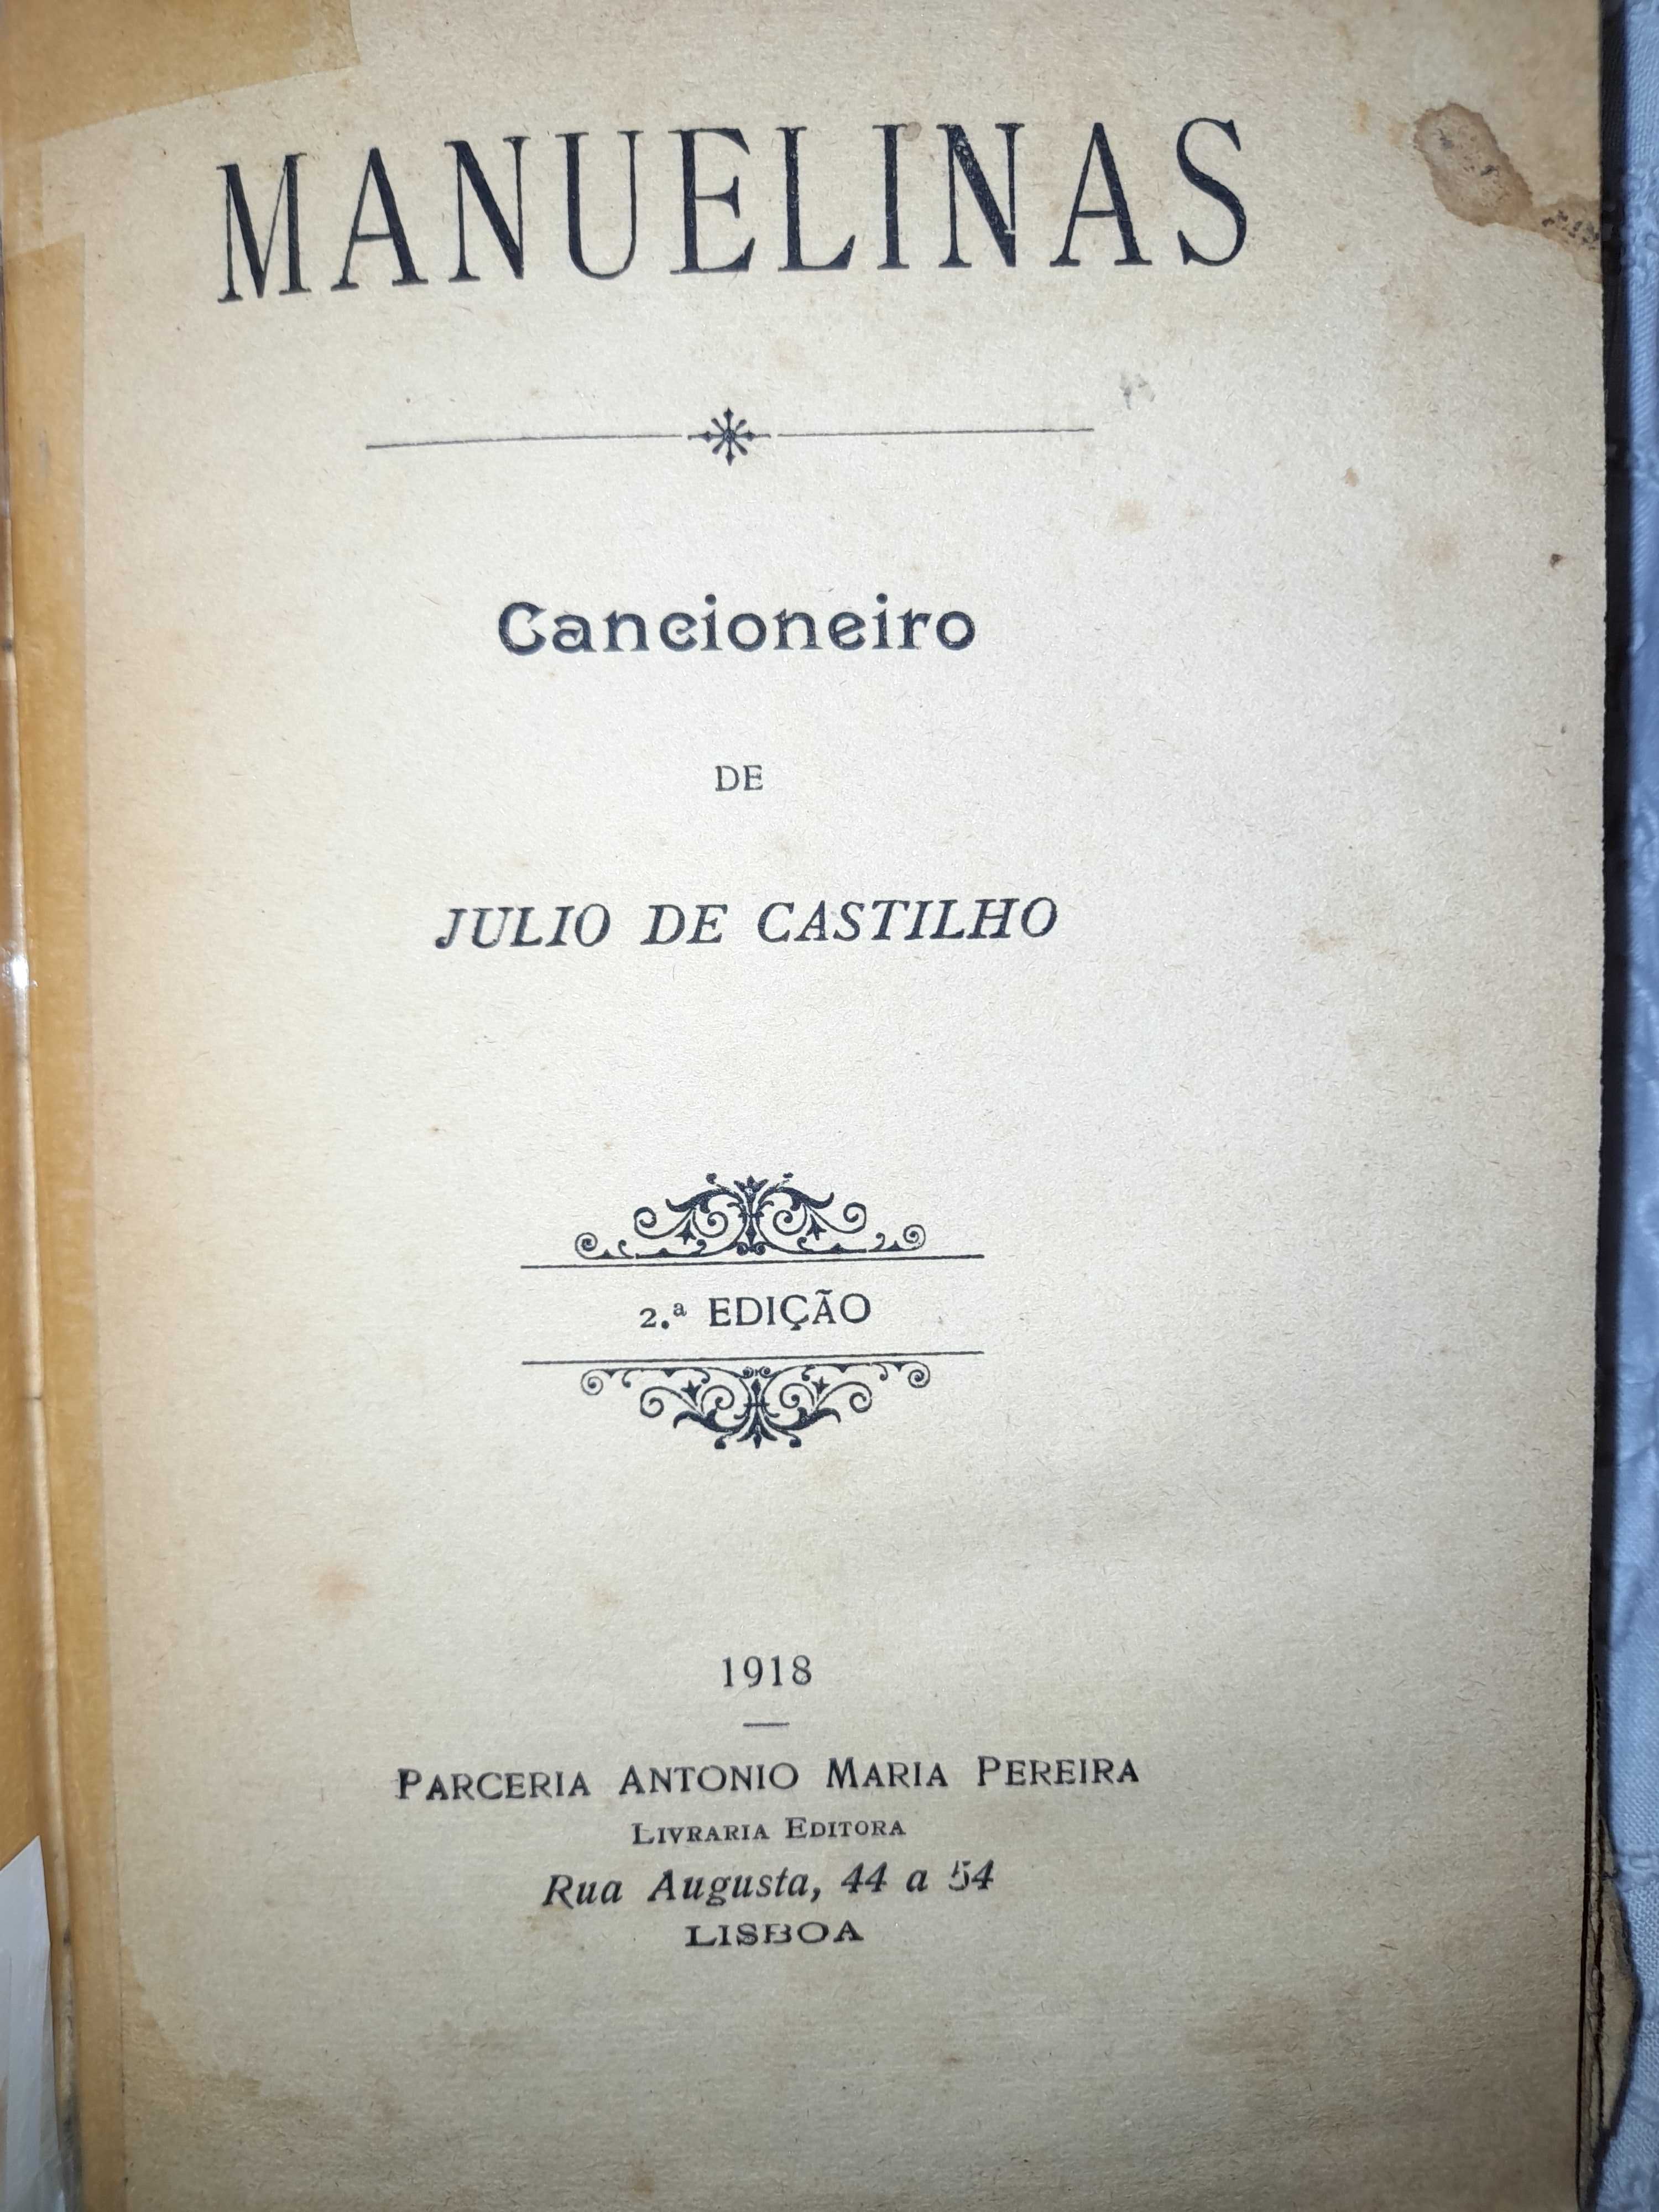 Julio de Castilho, Manuelinas